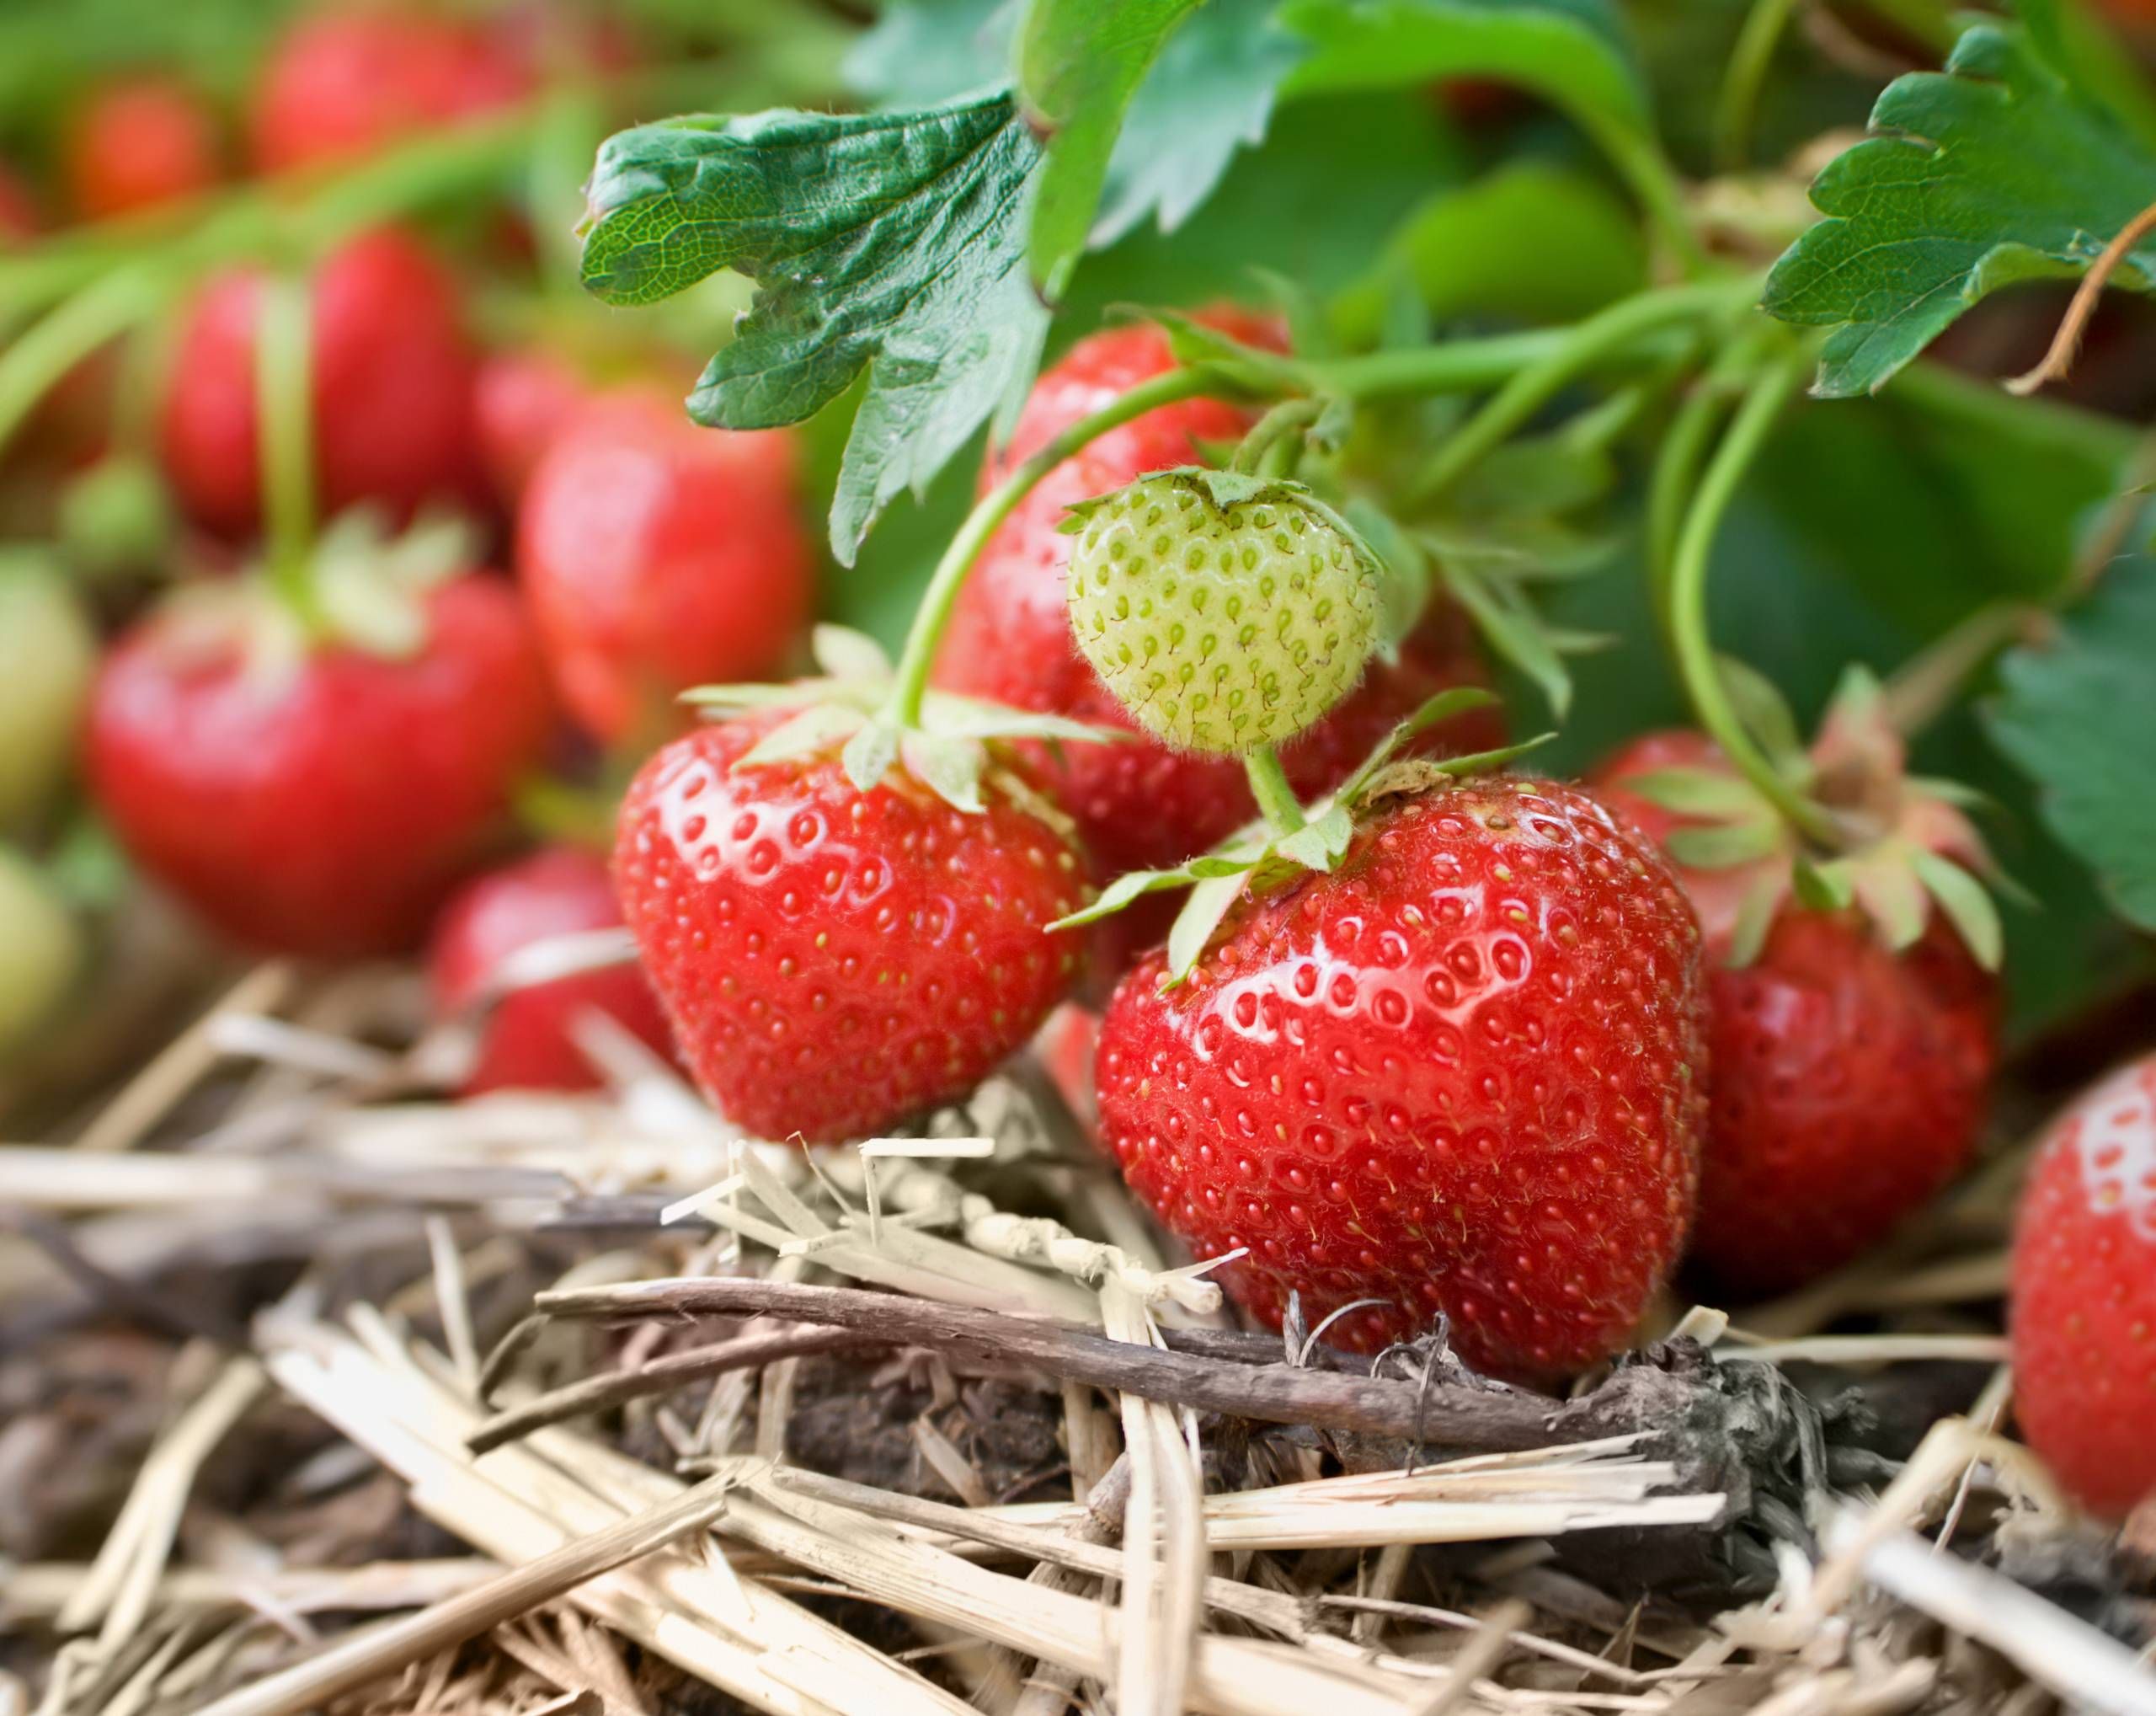 Plant jordbær i og flere jordbær